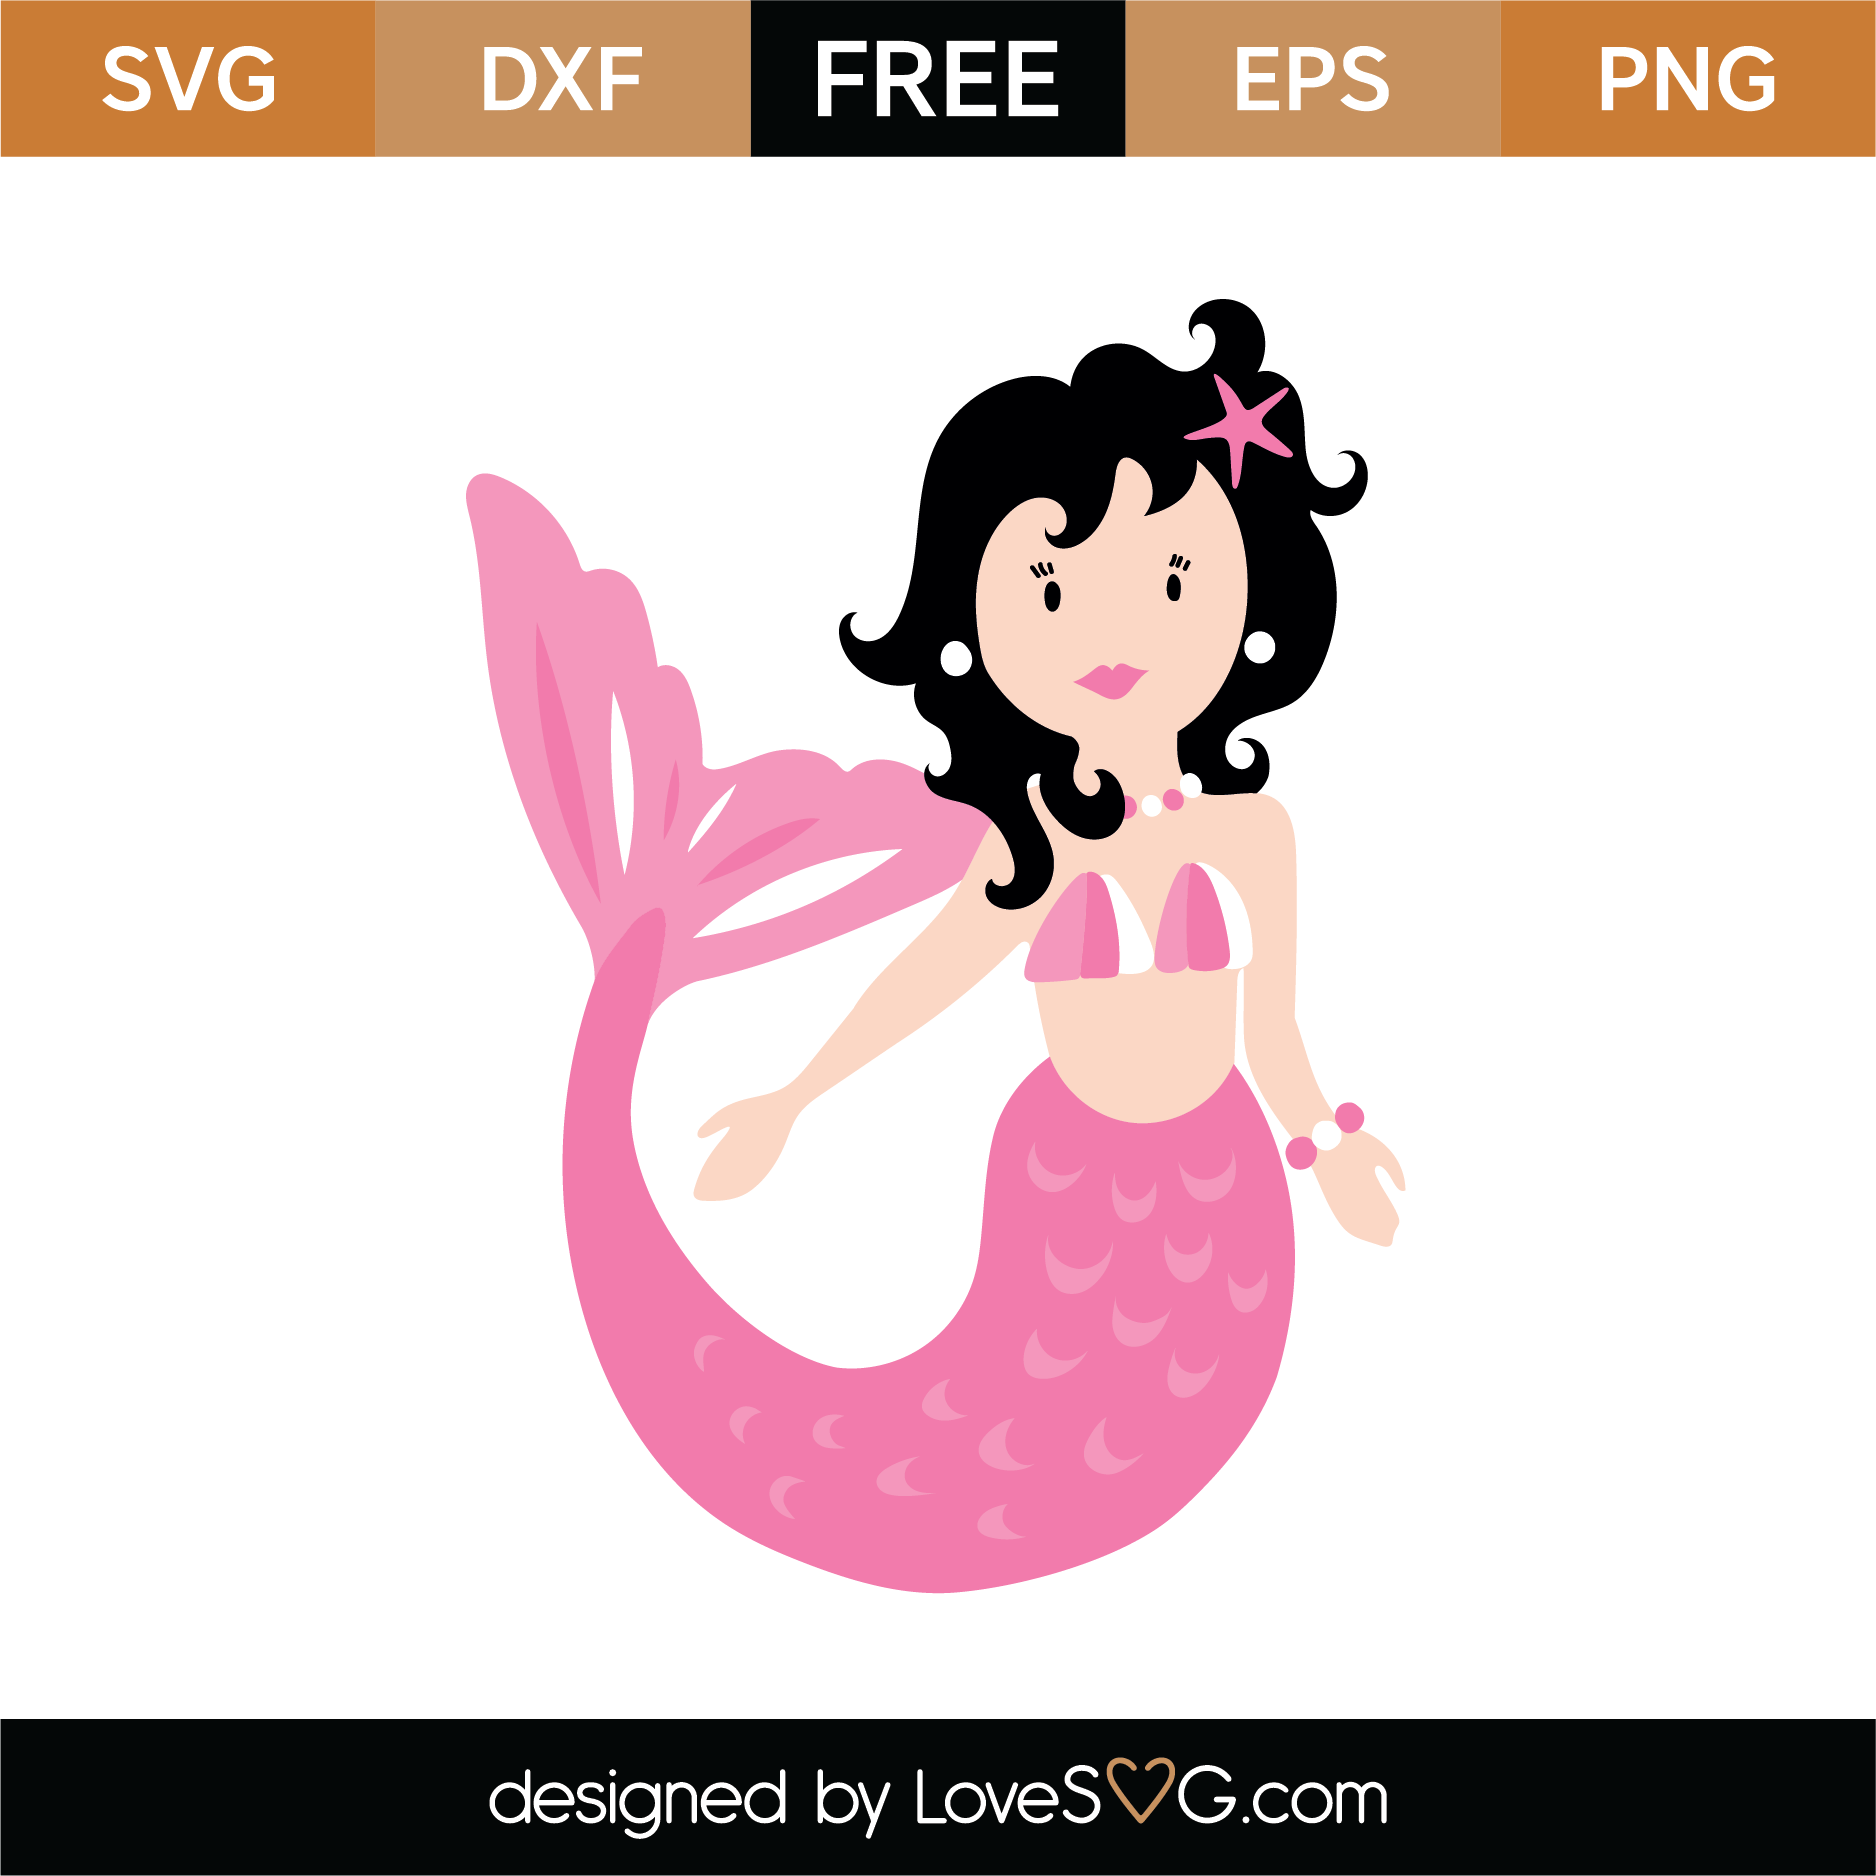 Download Mermaid SVG Cut File - Lovesvg.com